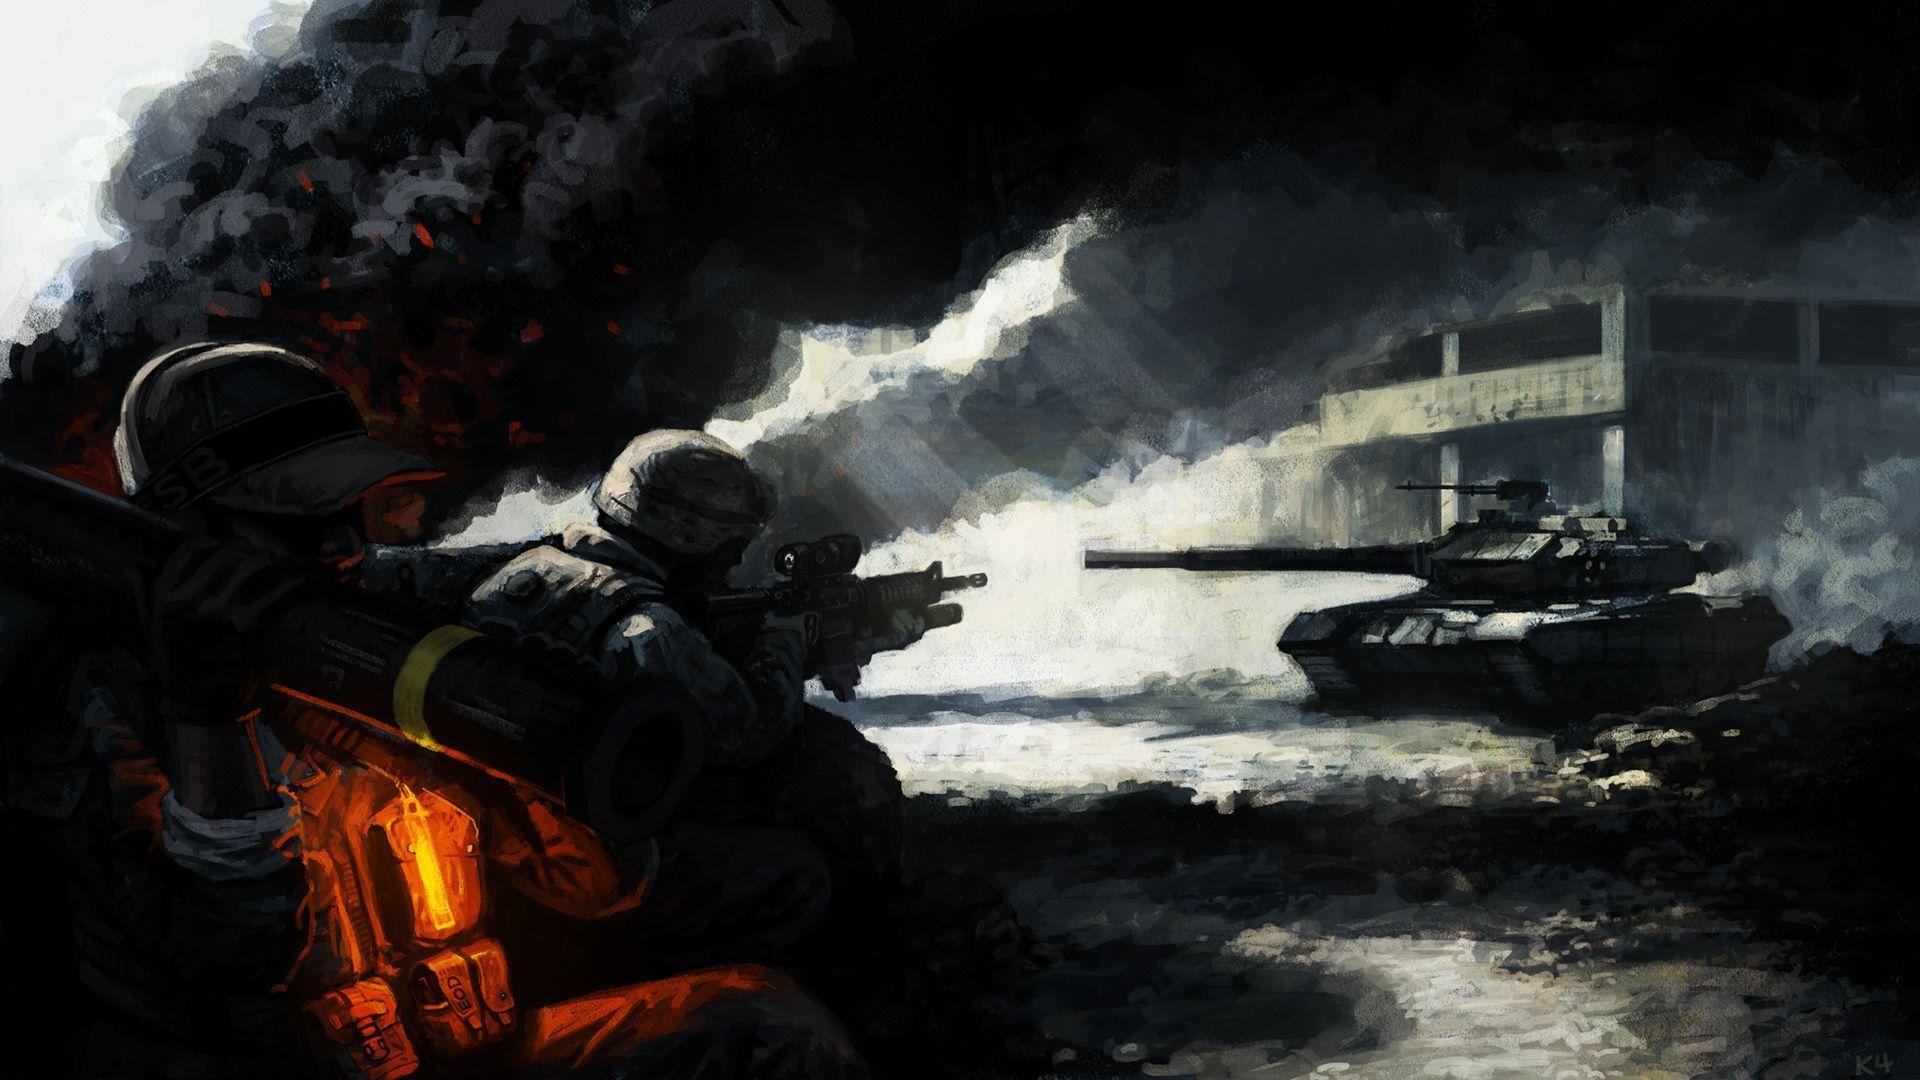 Battlefield 3 Wallpapers 1080p - Wallpaper Cave